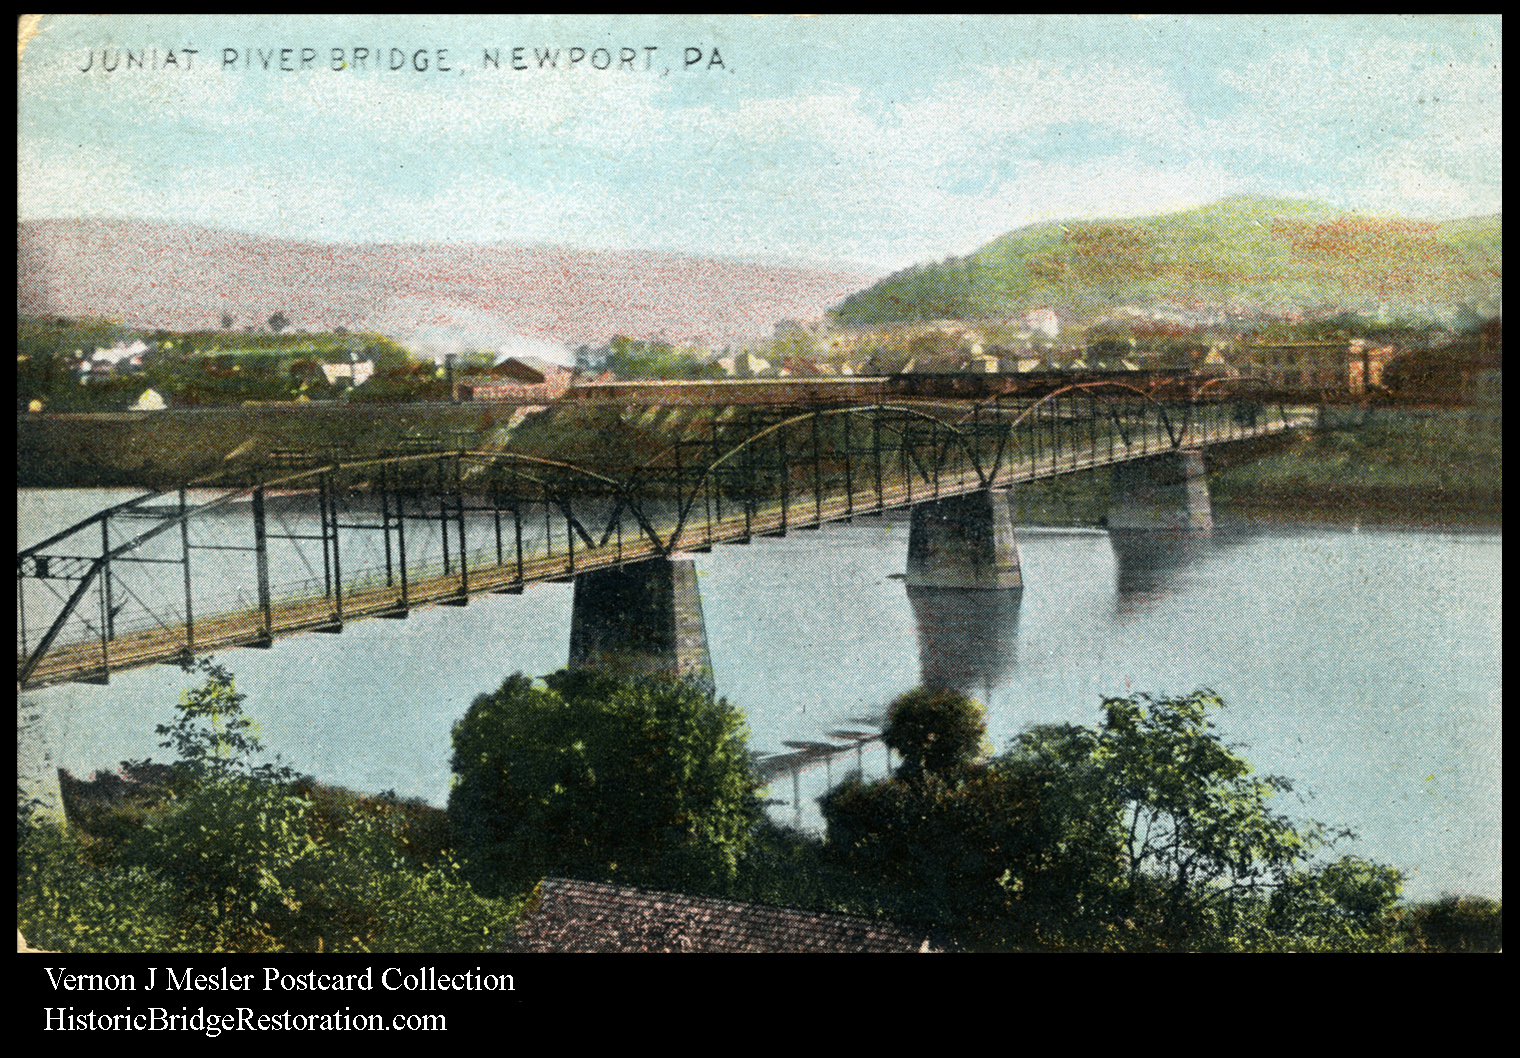 Juniat River Bridge, Newport, PA